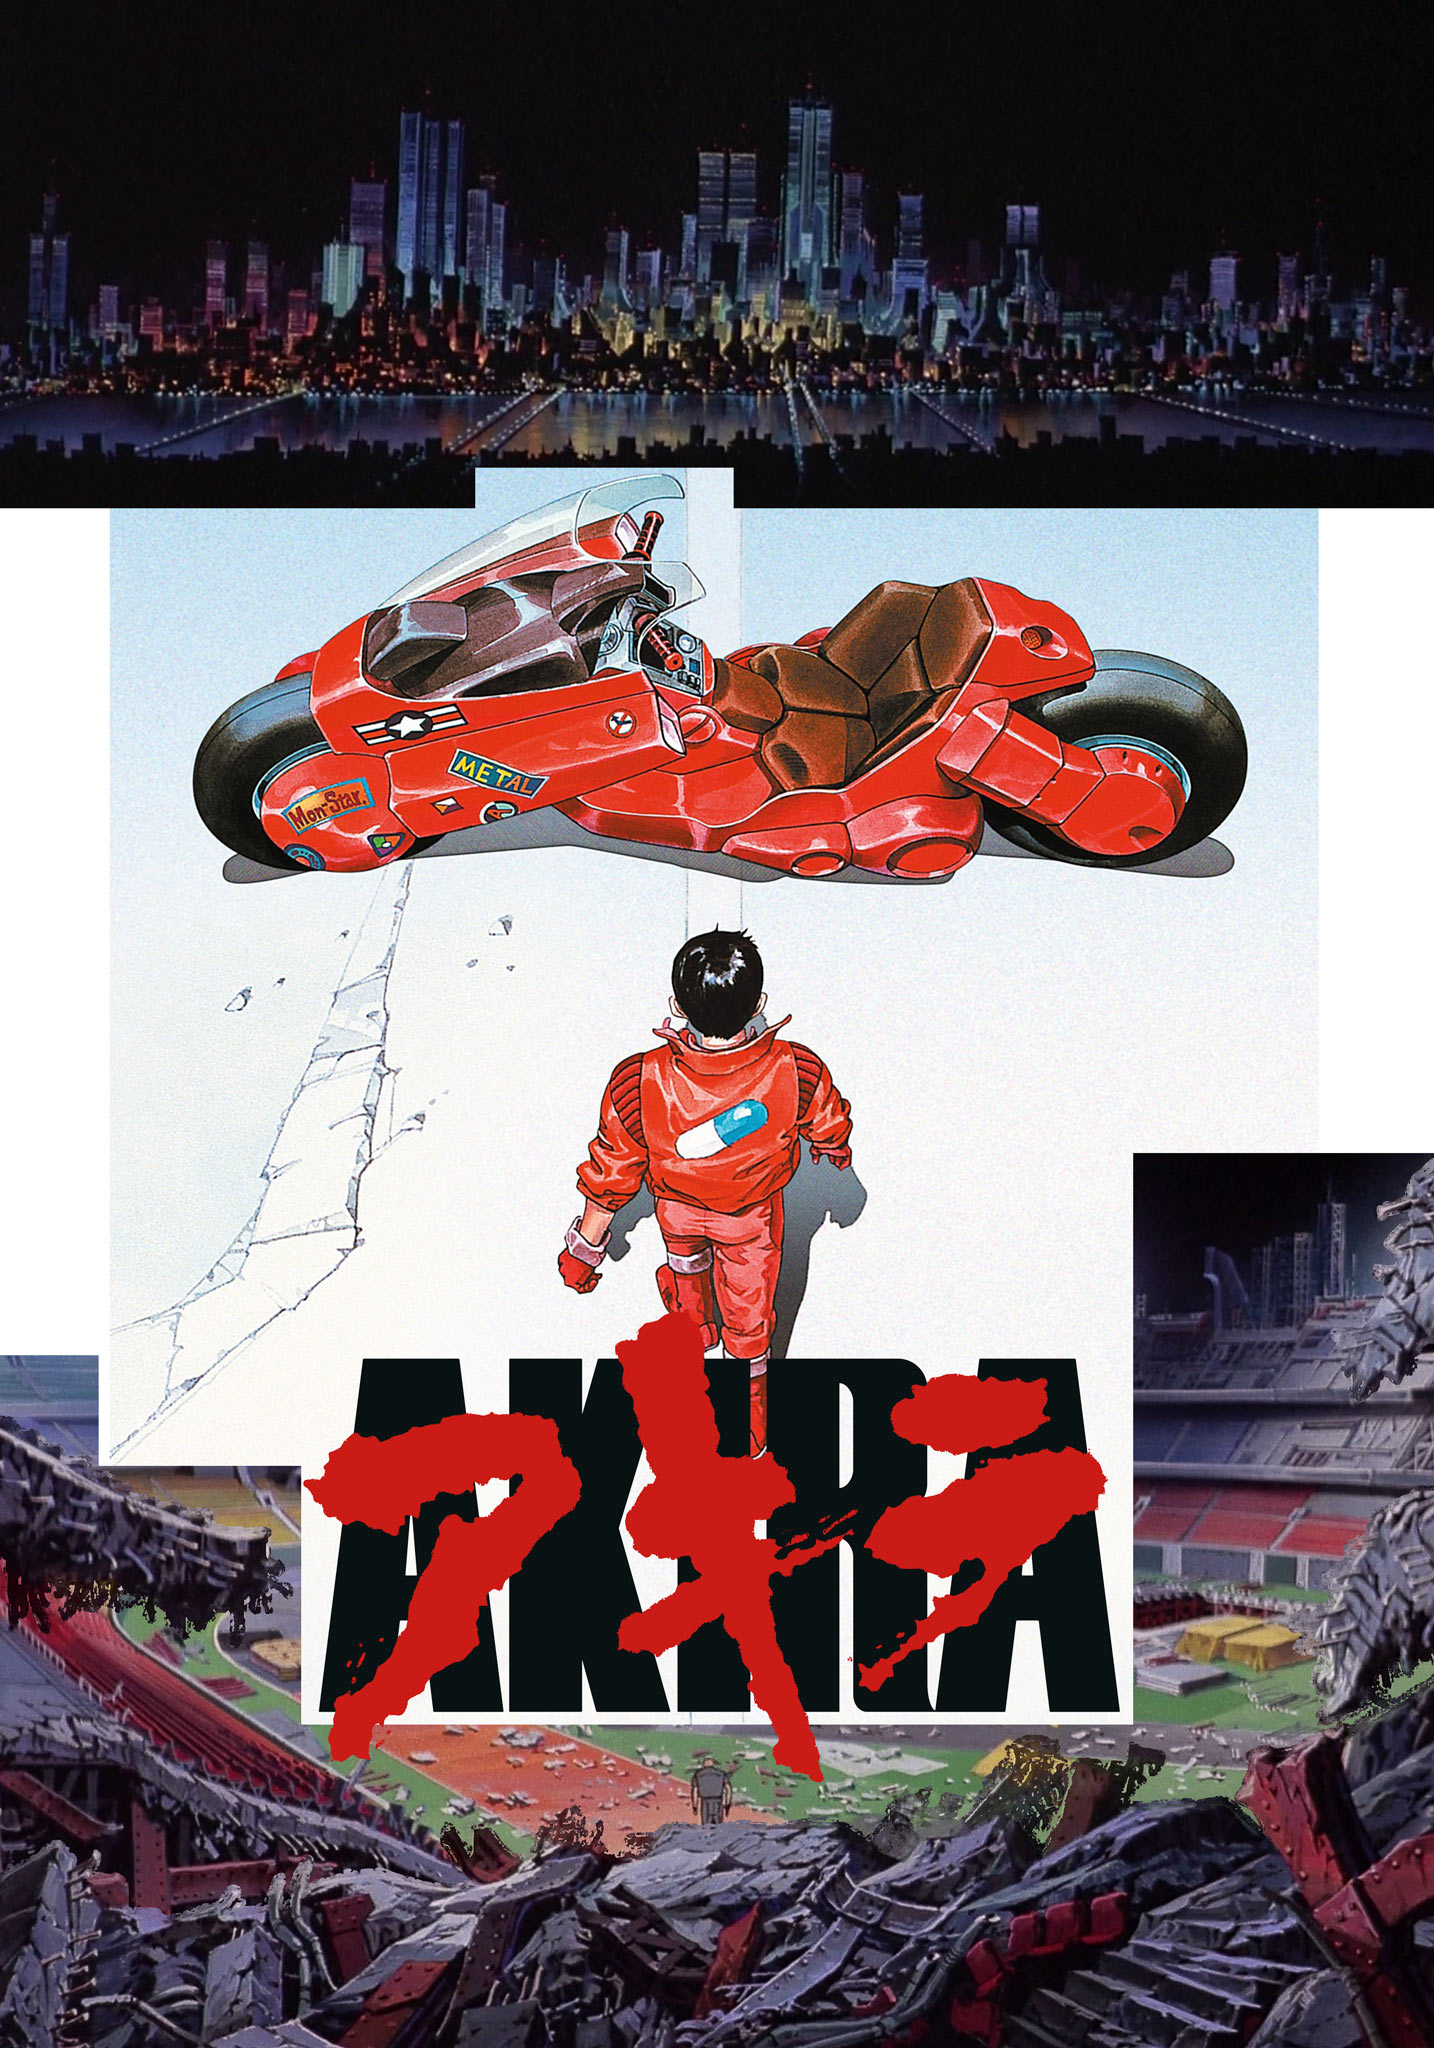 Akira (1988) before